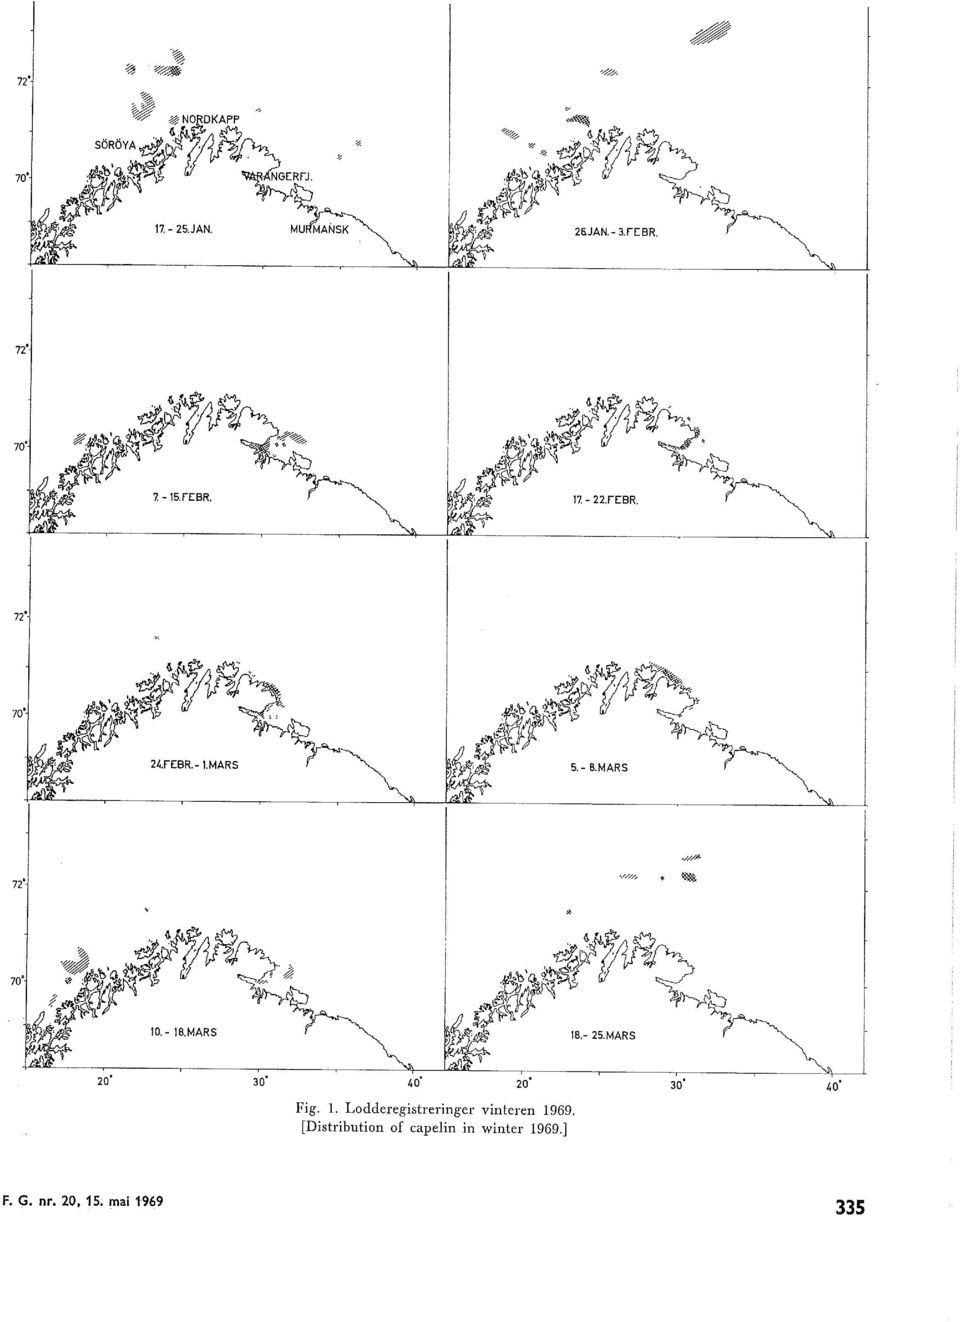 [Distribution of capein in winter 969.